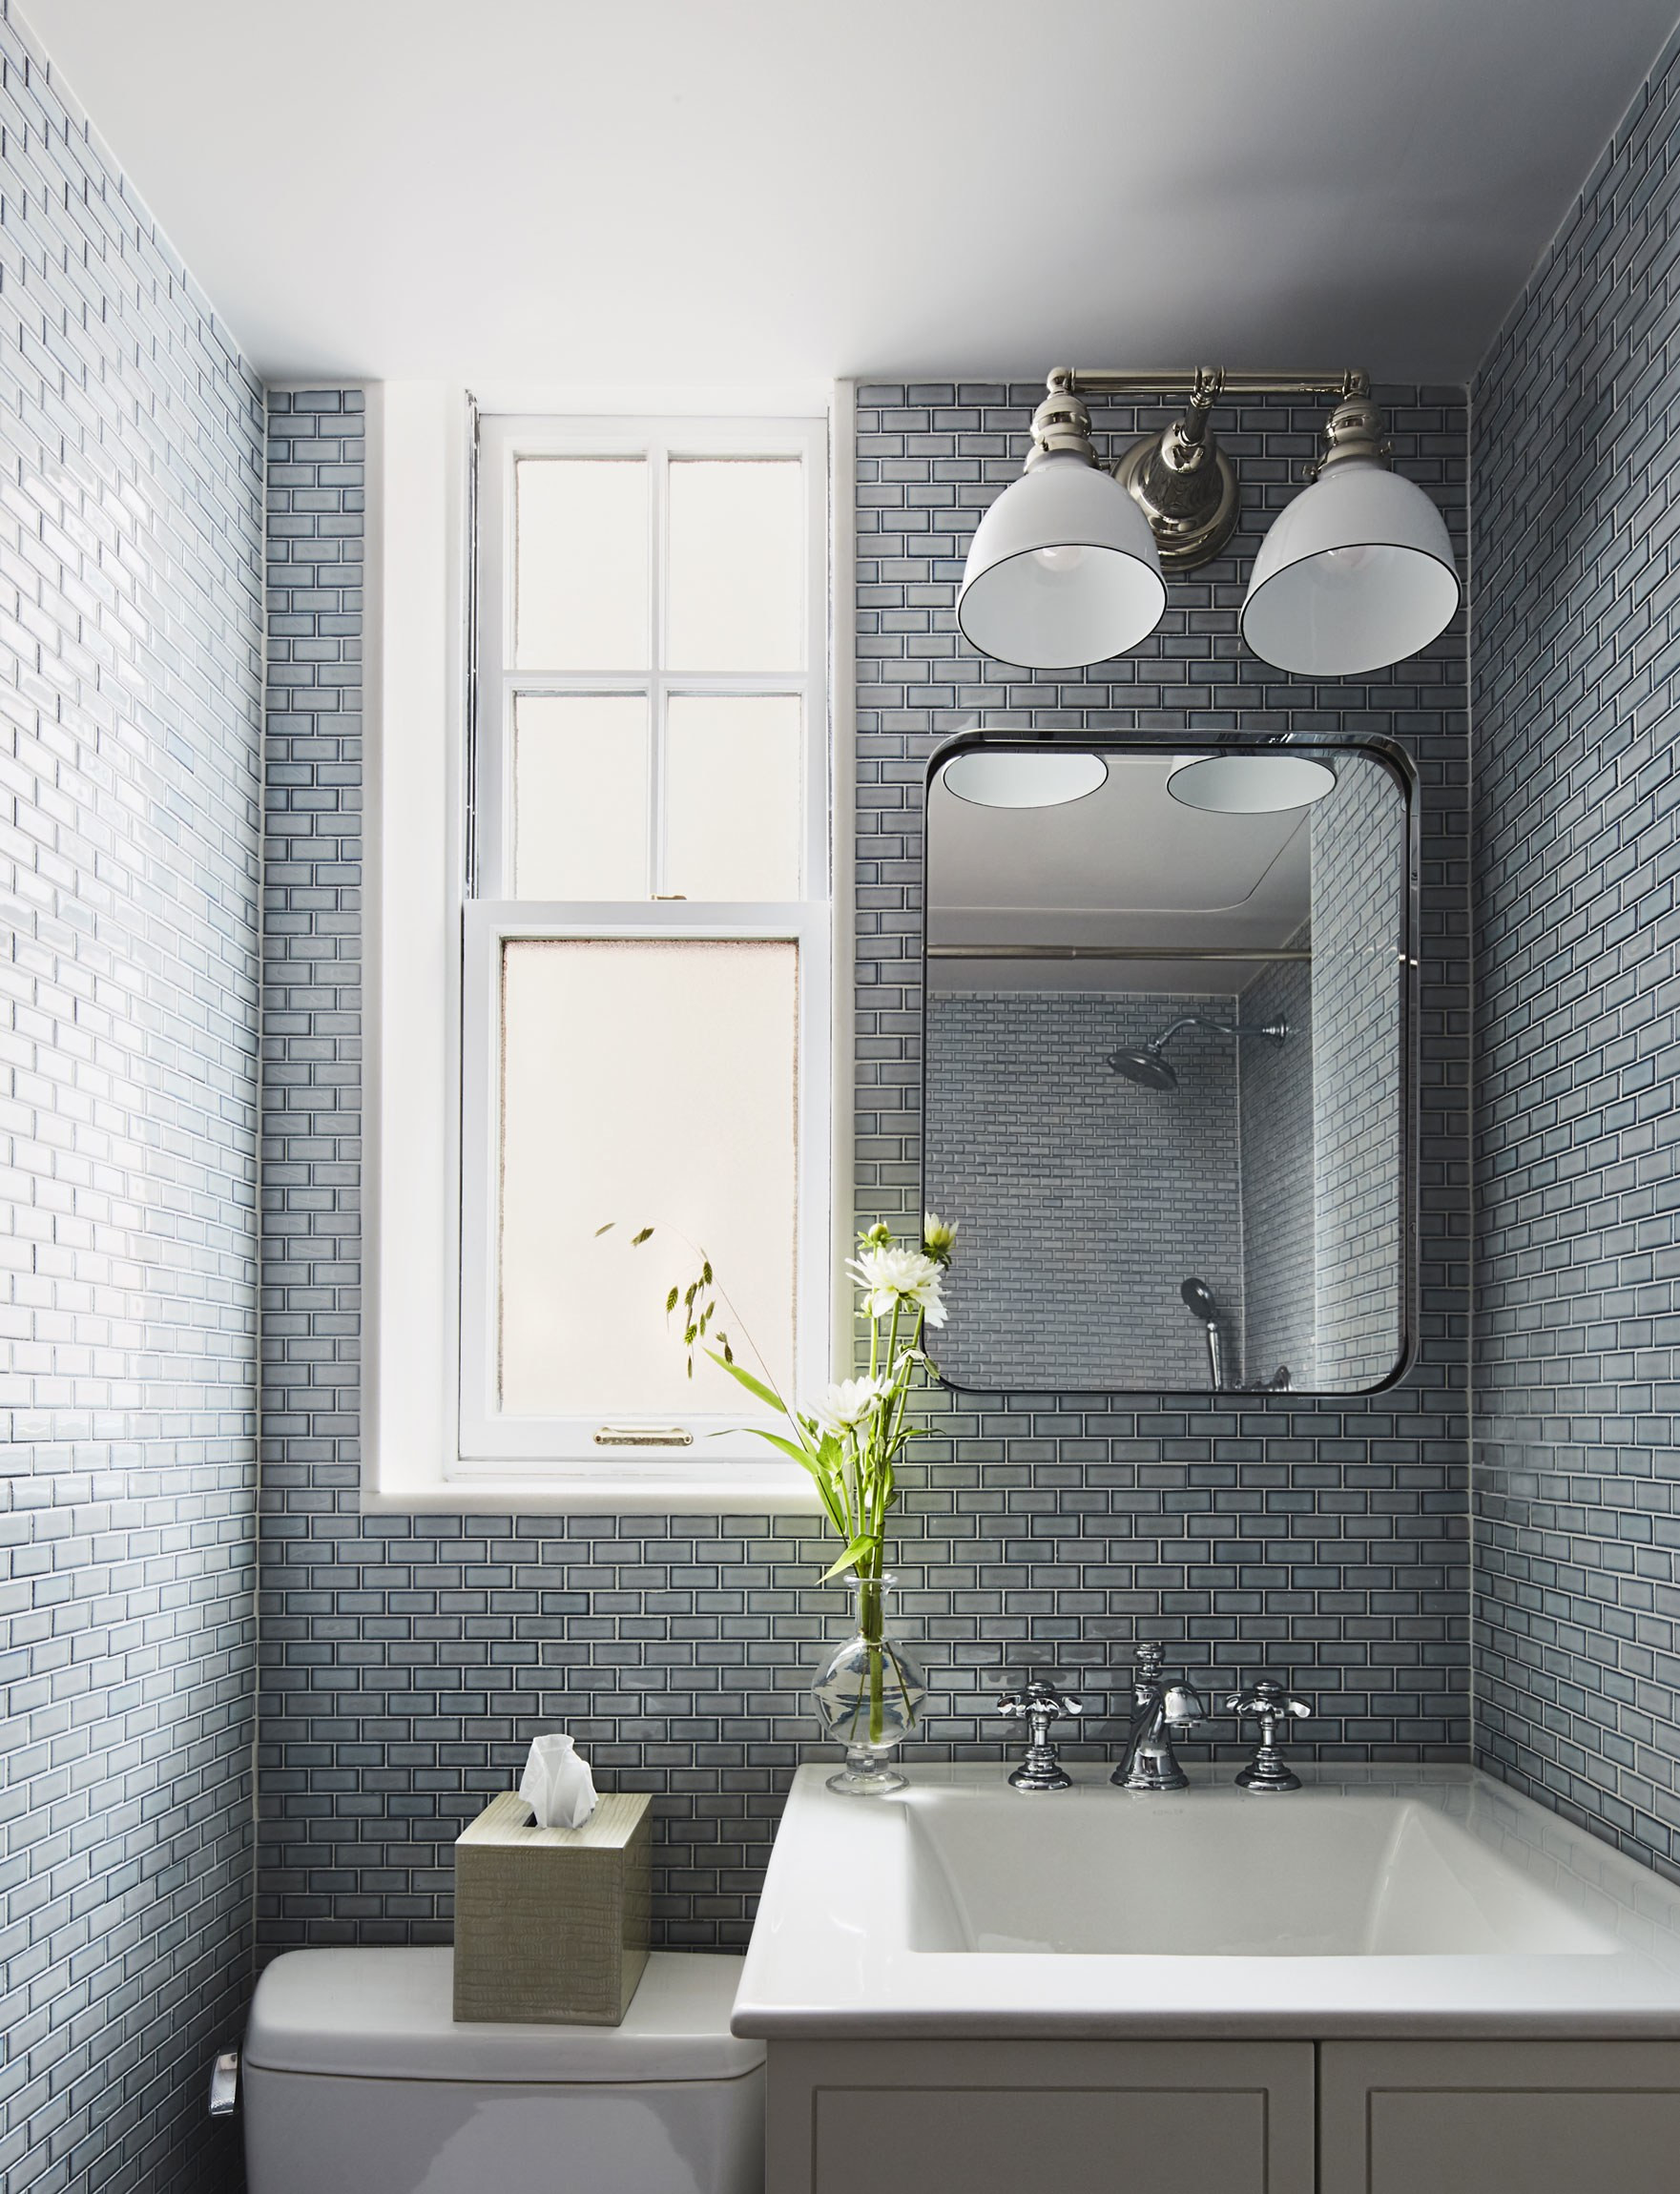 Bathroom Wall Tile Designs
 This Bathroom Tile Design Idea Changes Everything